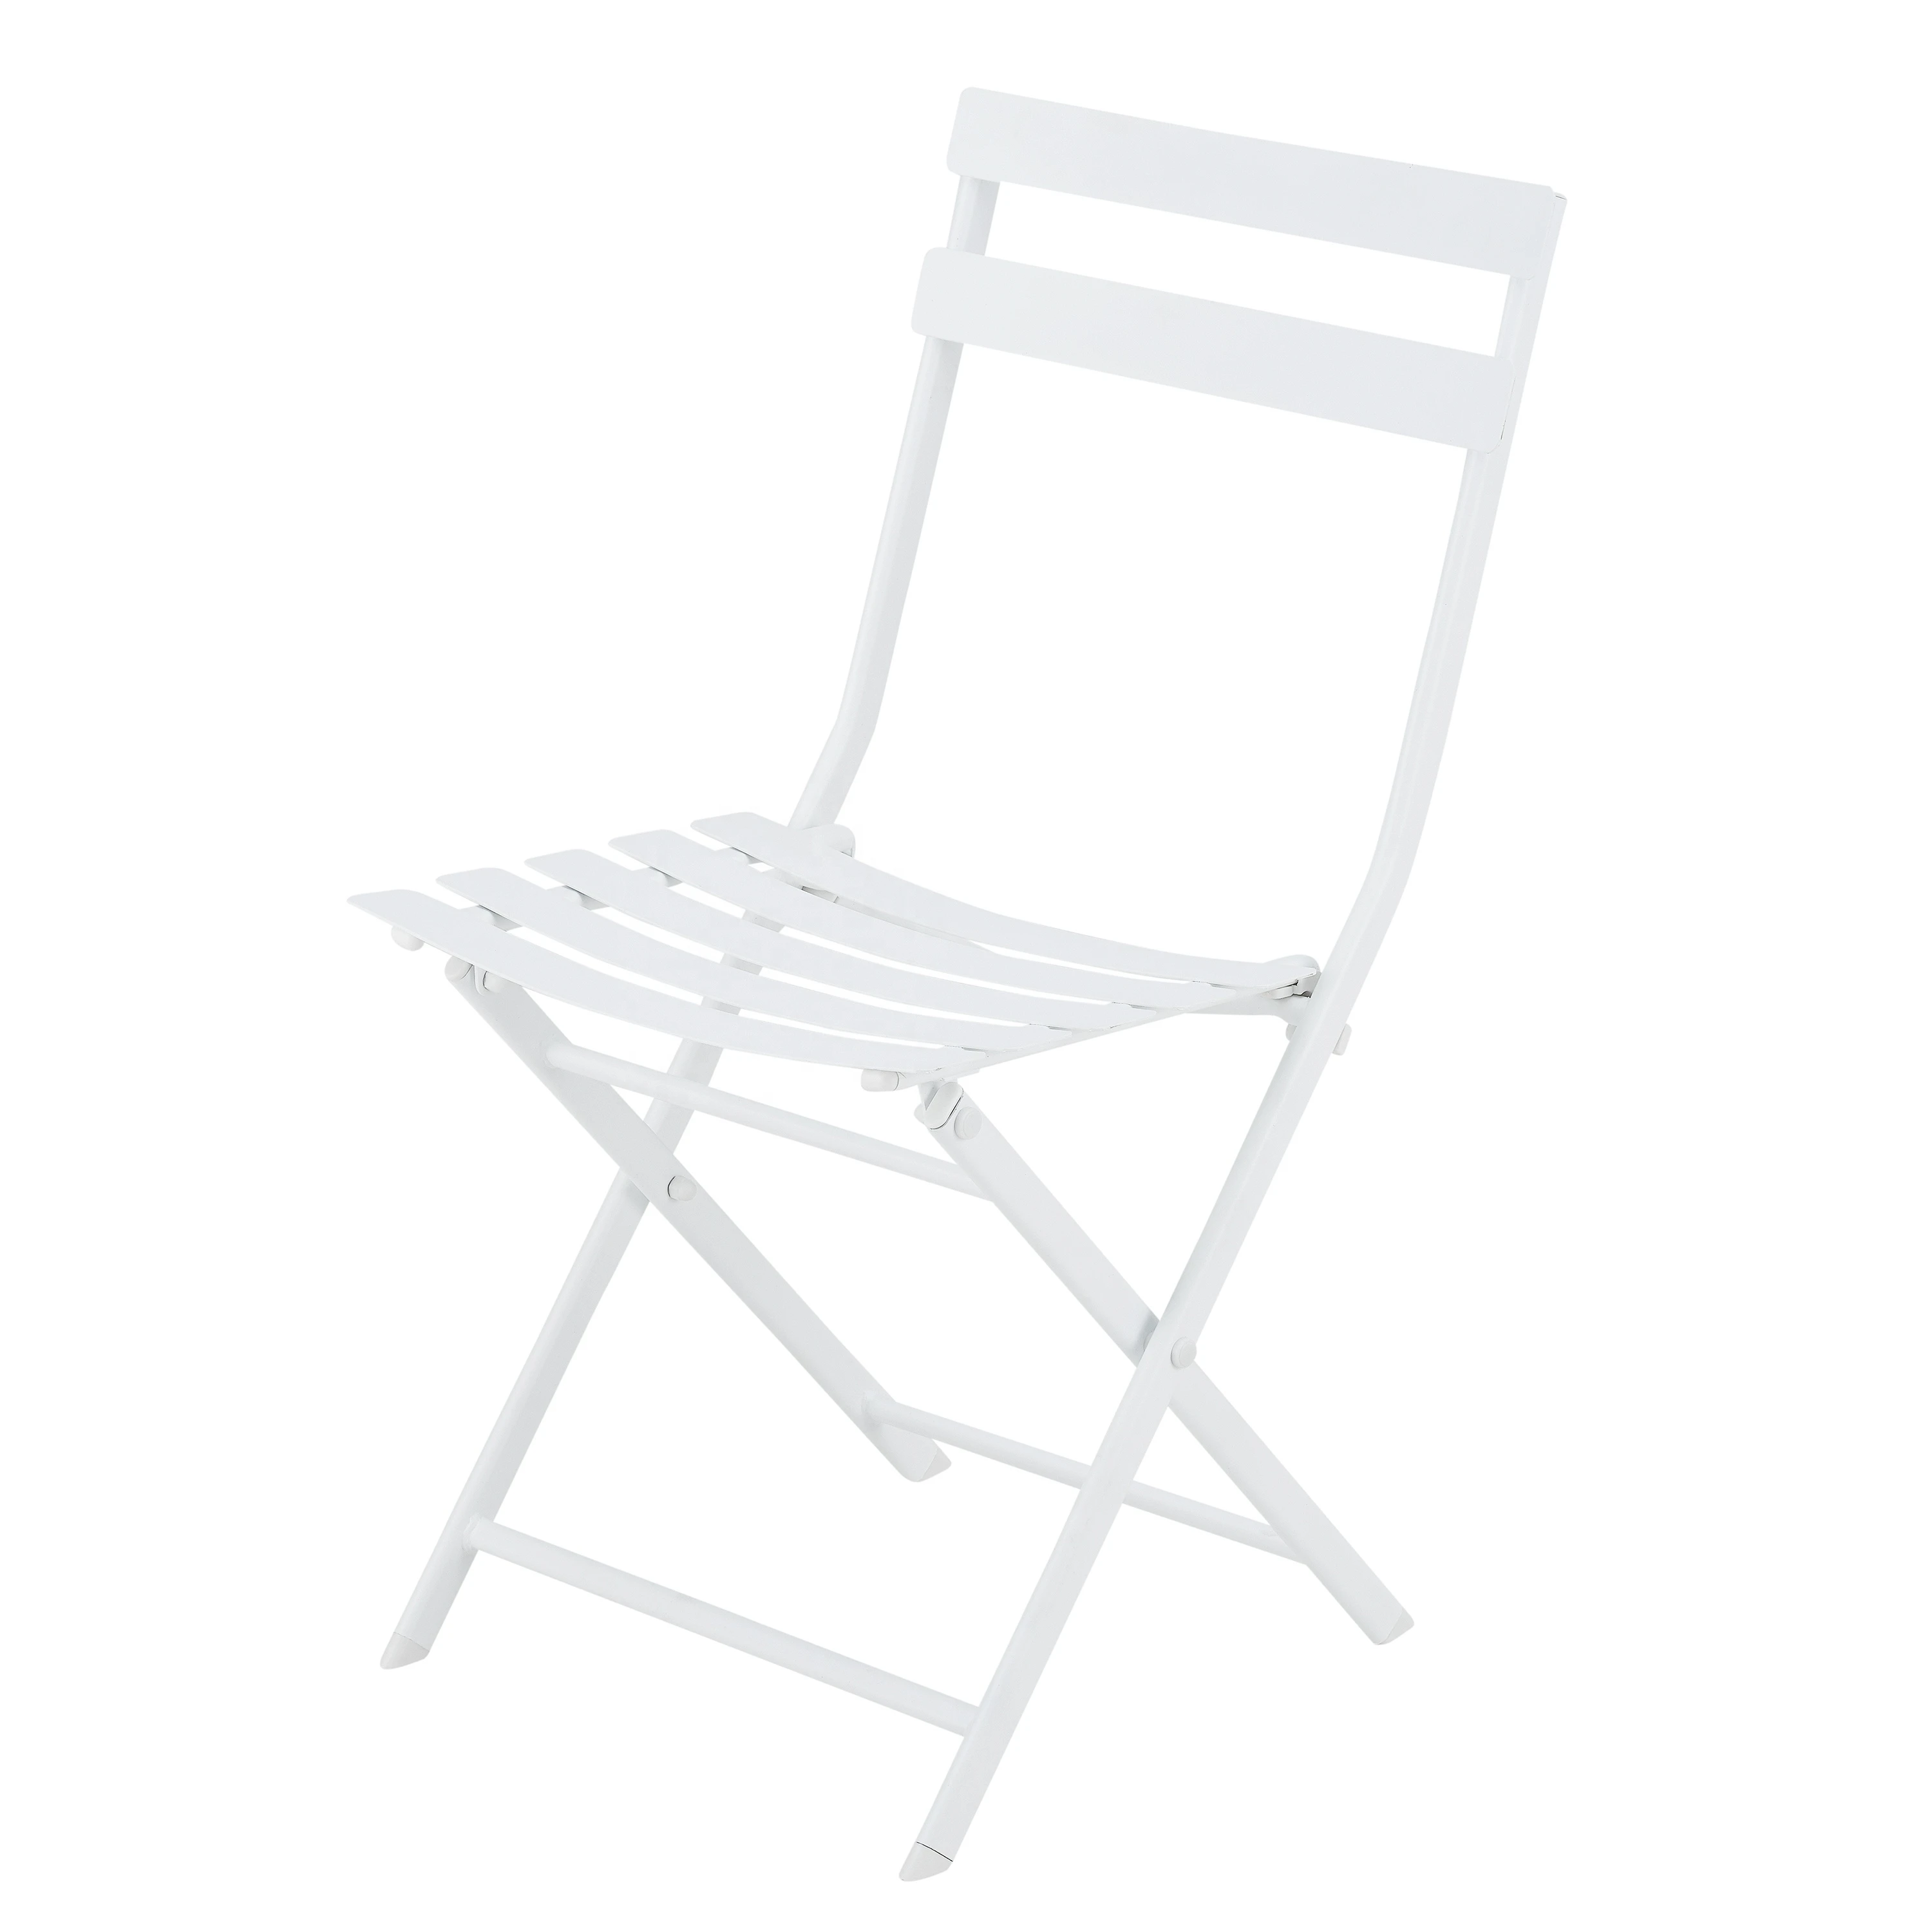 Outdoor  Furniture folding table & chair set  metal 3PCS Outdoor bistro set